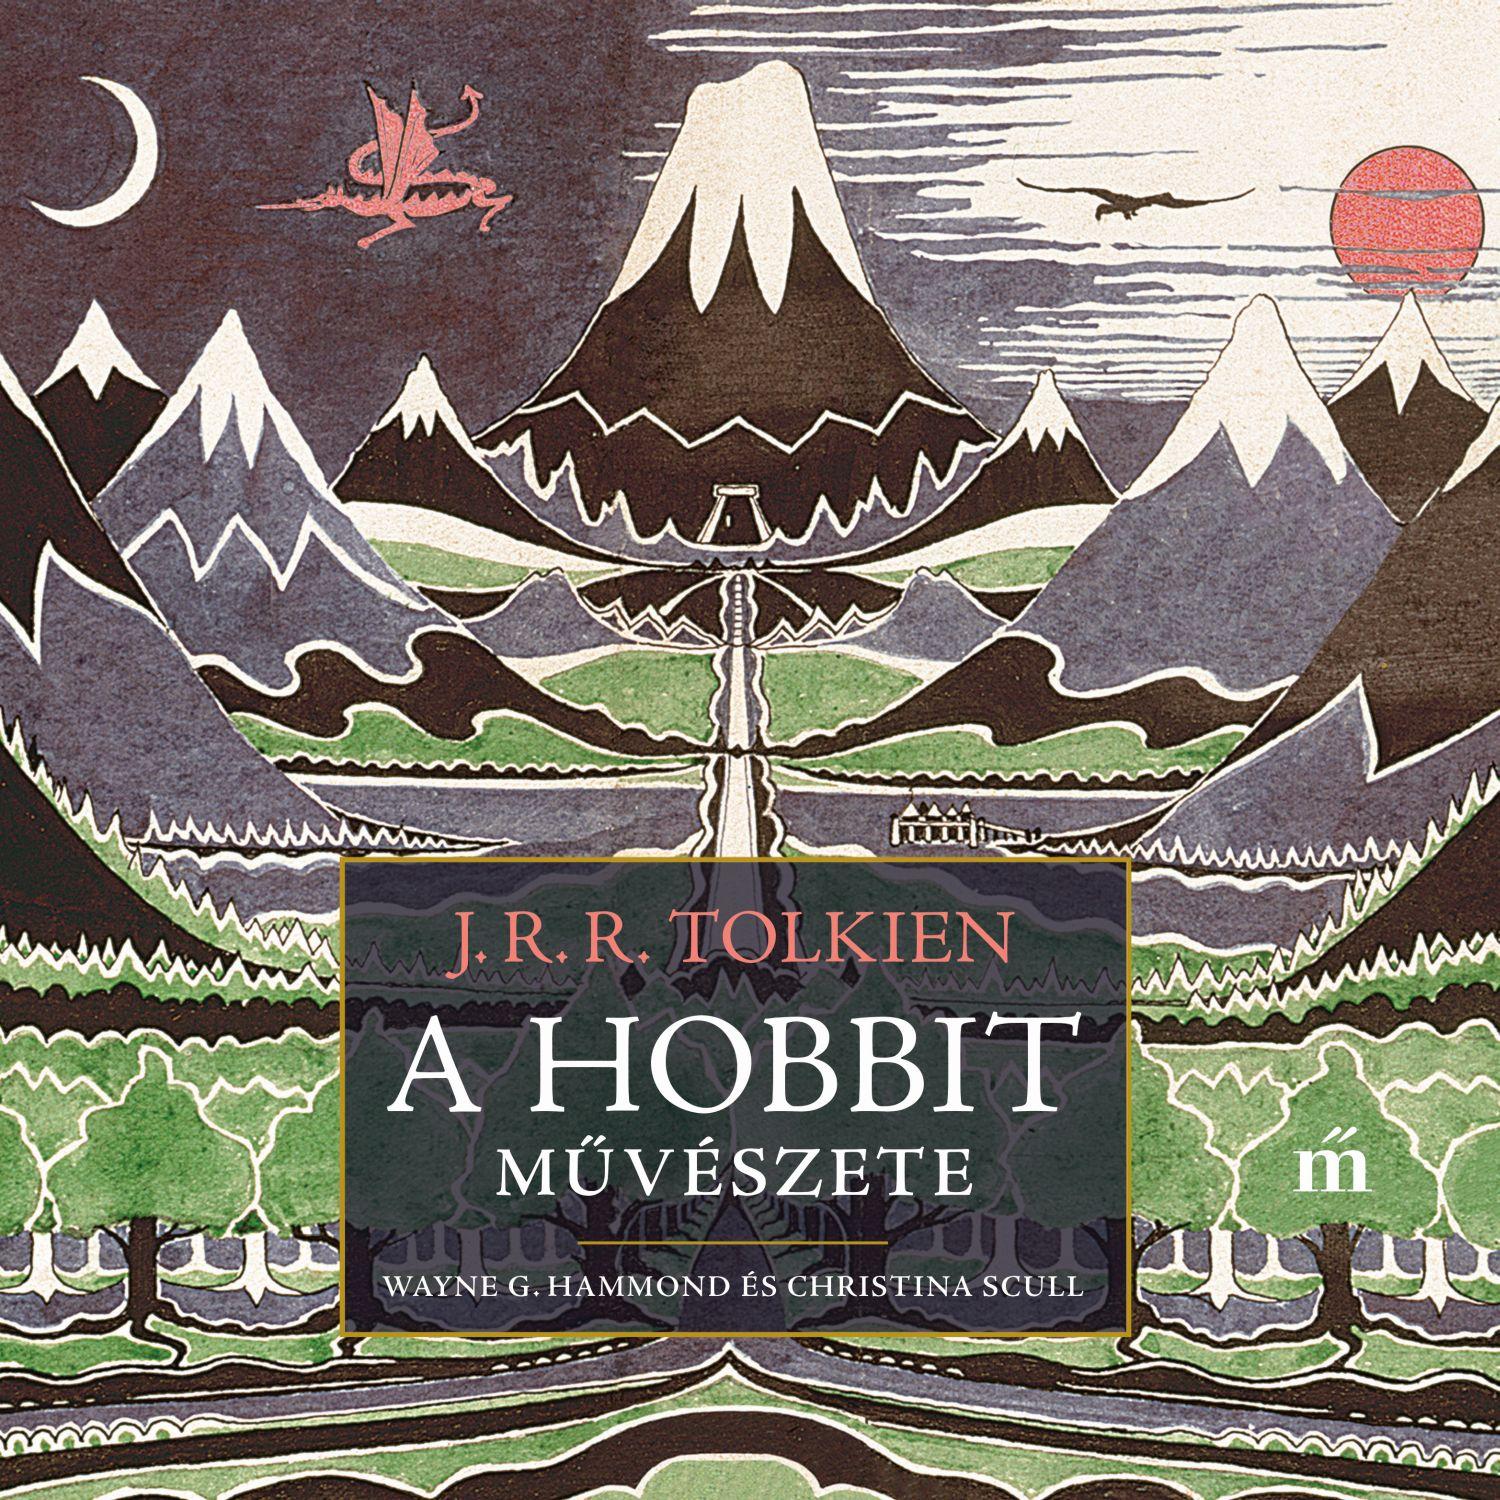 Tolkien, J. R. R. ; Wayne G. Hammond; Christina Scull - A hobbit művészete